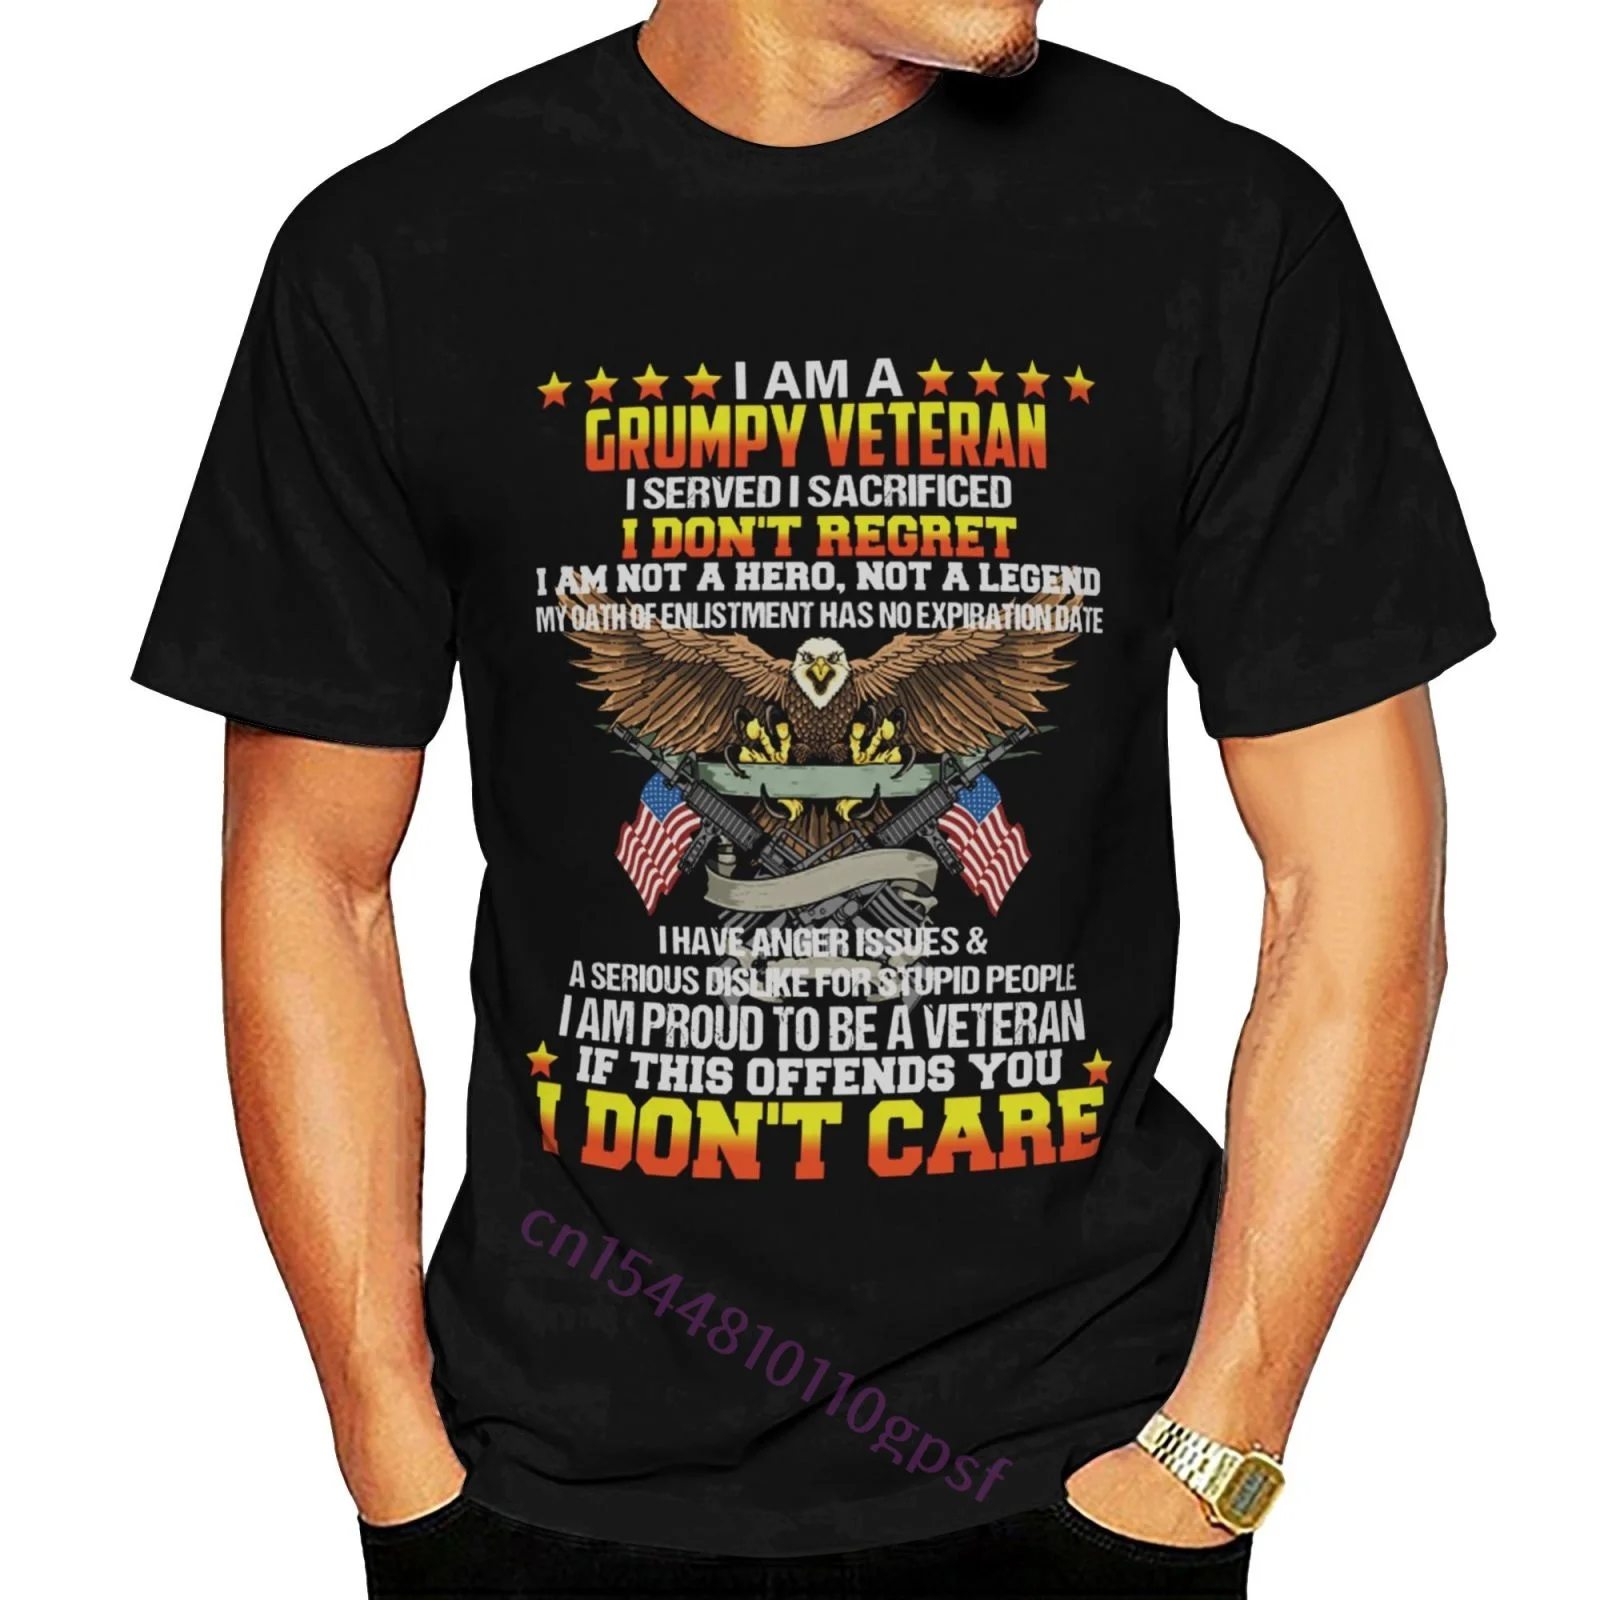 

I Am A Grumpy Veteran I Don't Regret T Shirt Men Cotton Casual T-Shirts Crew Neck Tee Shirt Short Sleeve Tops Party